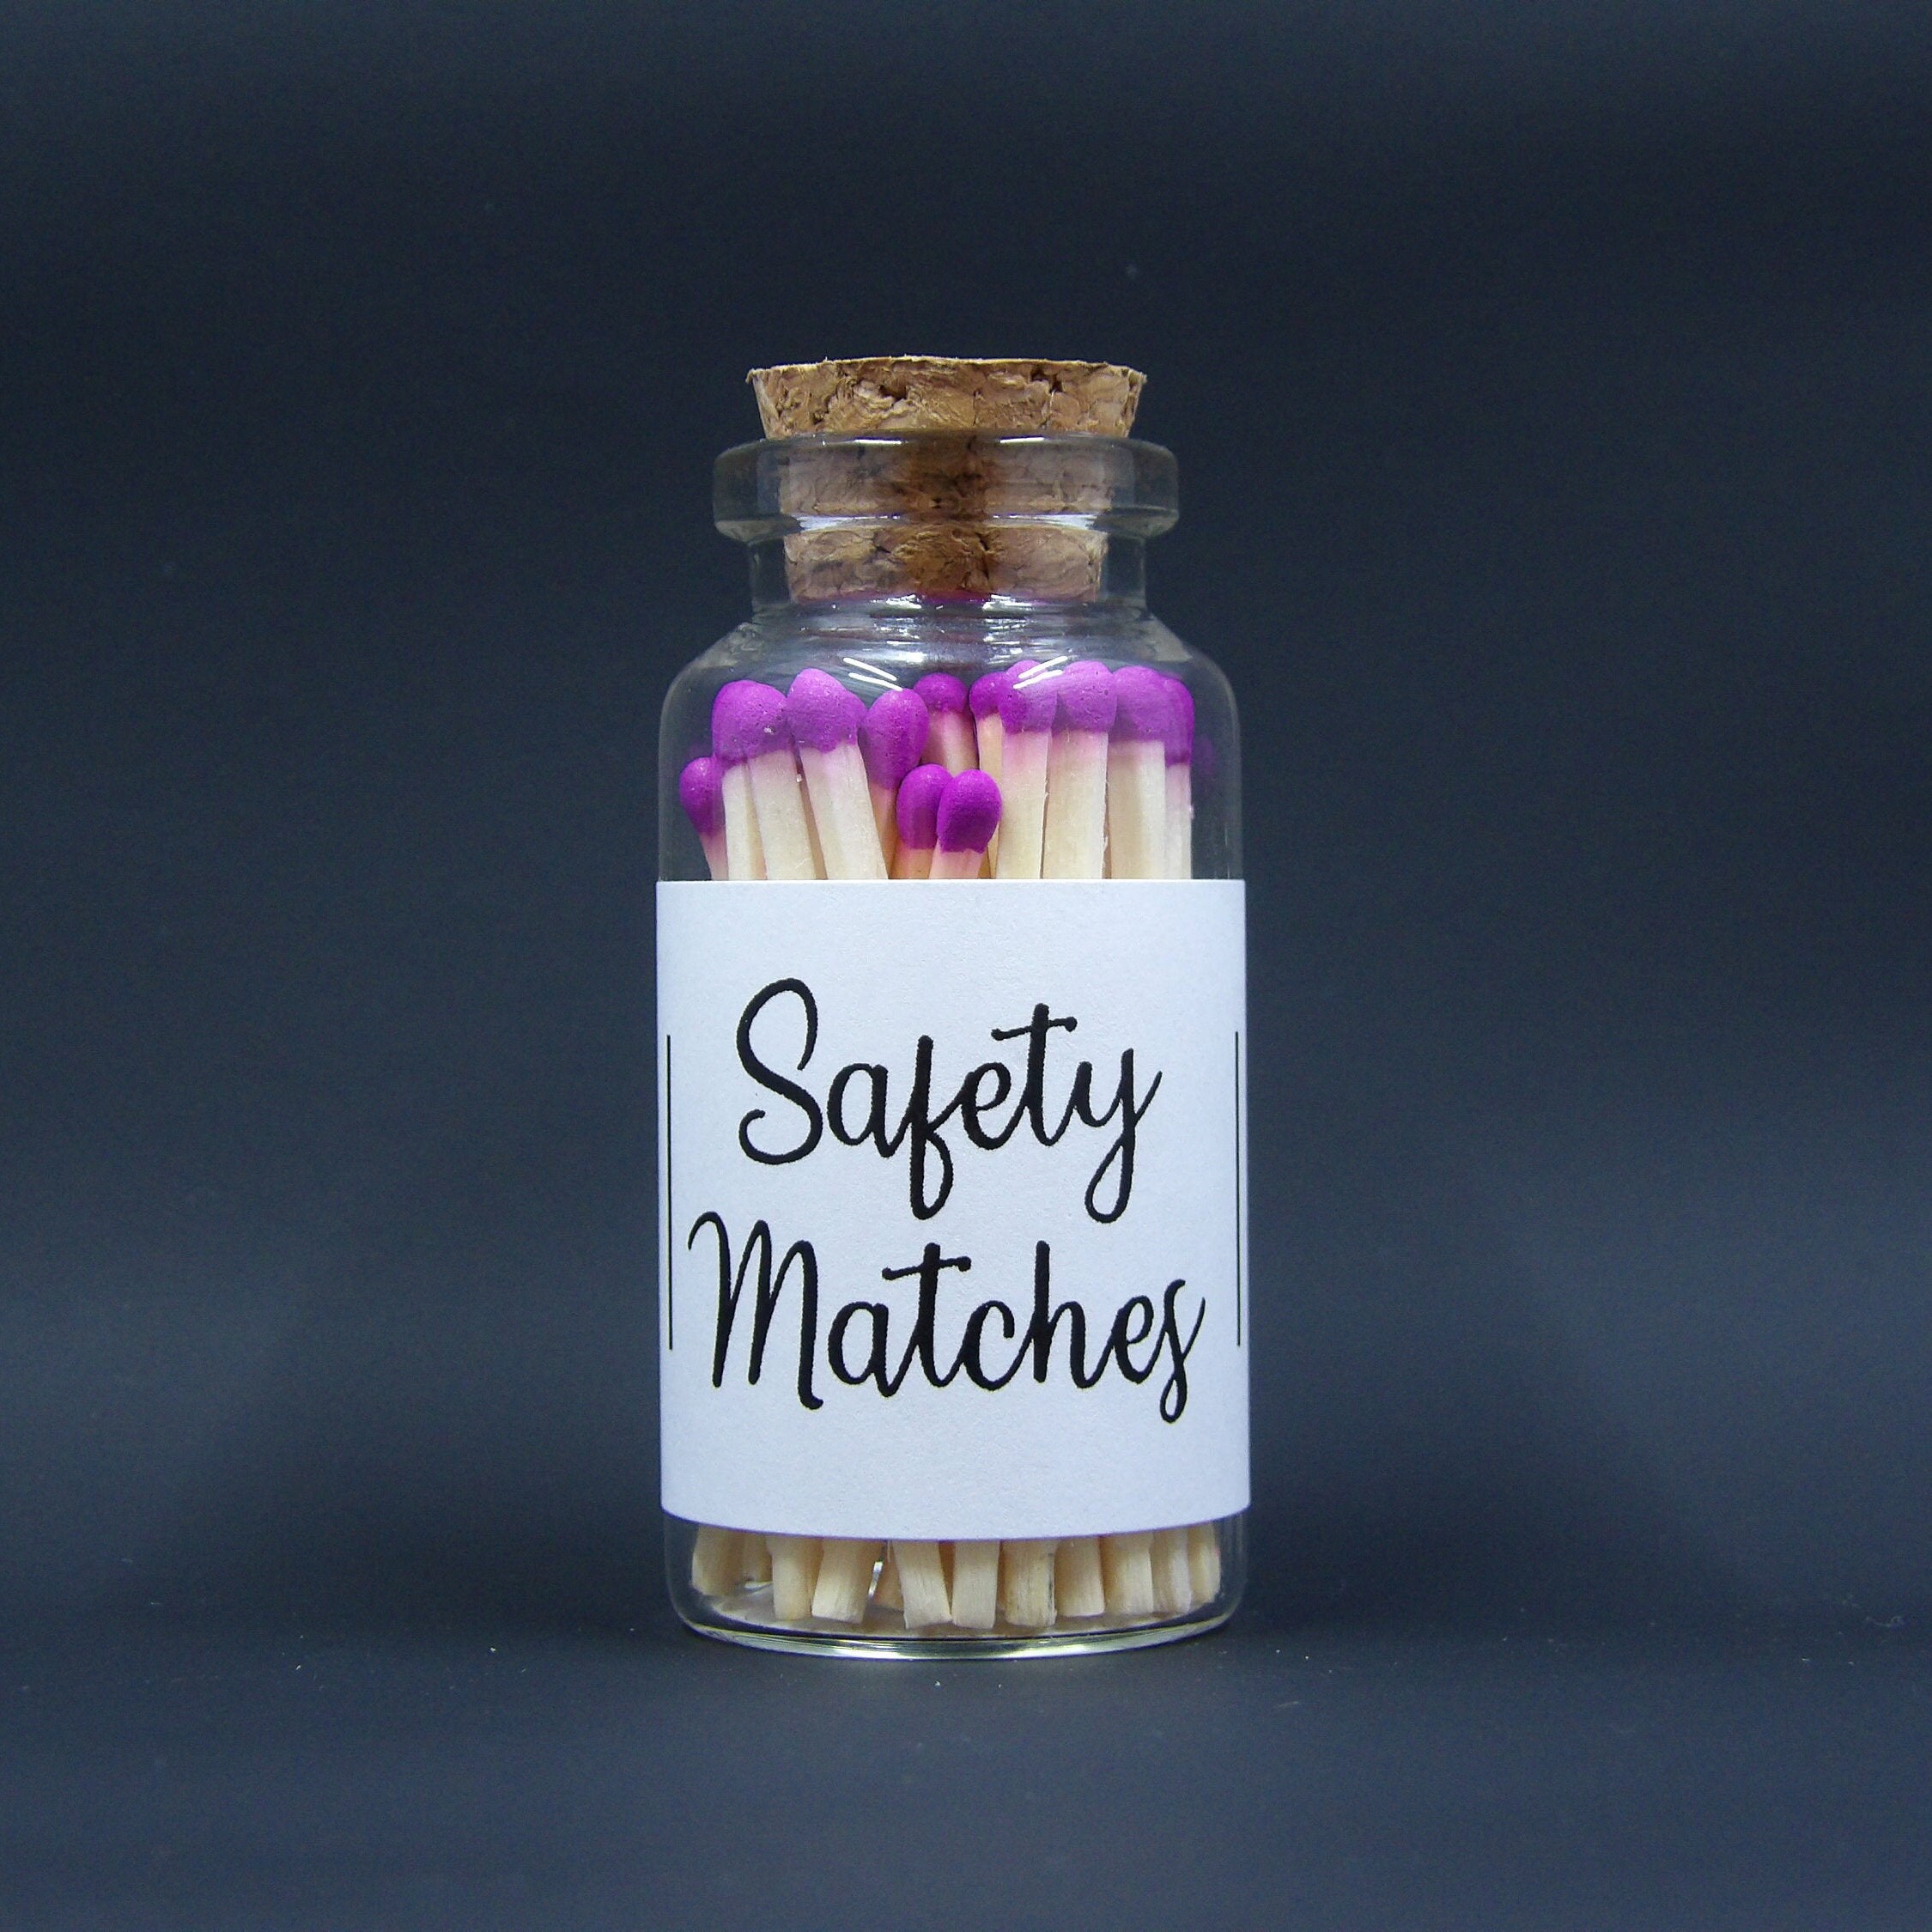 Wooden Matchsticks in Glass Bottle- Hot Pink Tips